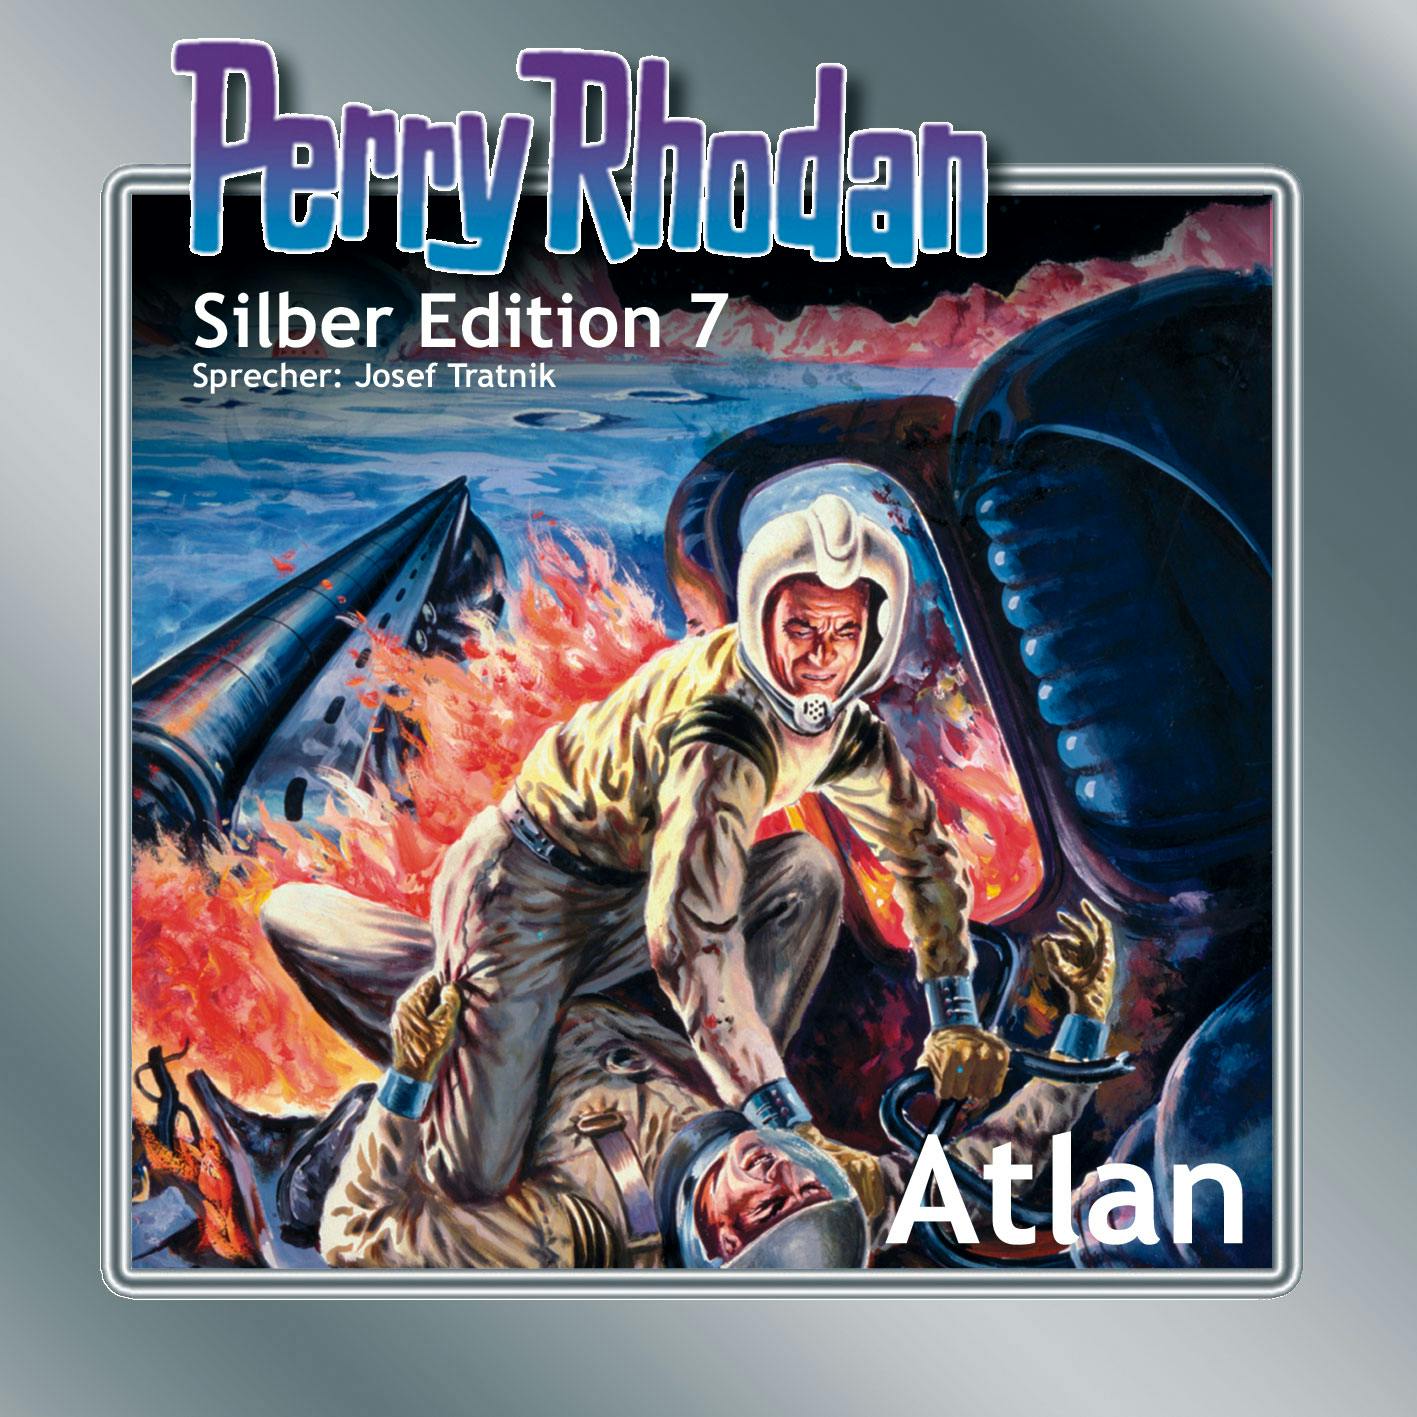 Perry Rhodan Silber Edition 07: Atlan: Perry Rhodan-Zyklus "Altan und Arkon" - Clark Darlton, K.H. Scheer, Kurt Brand